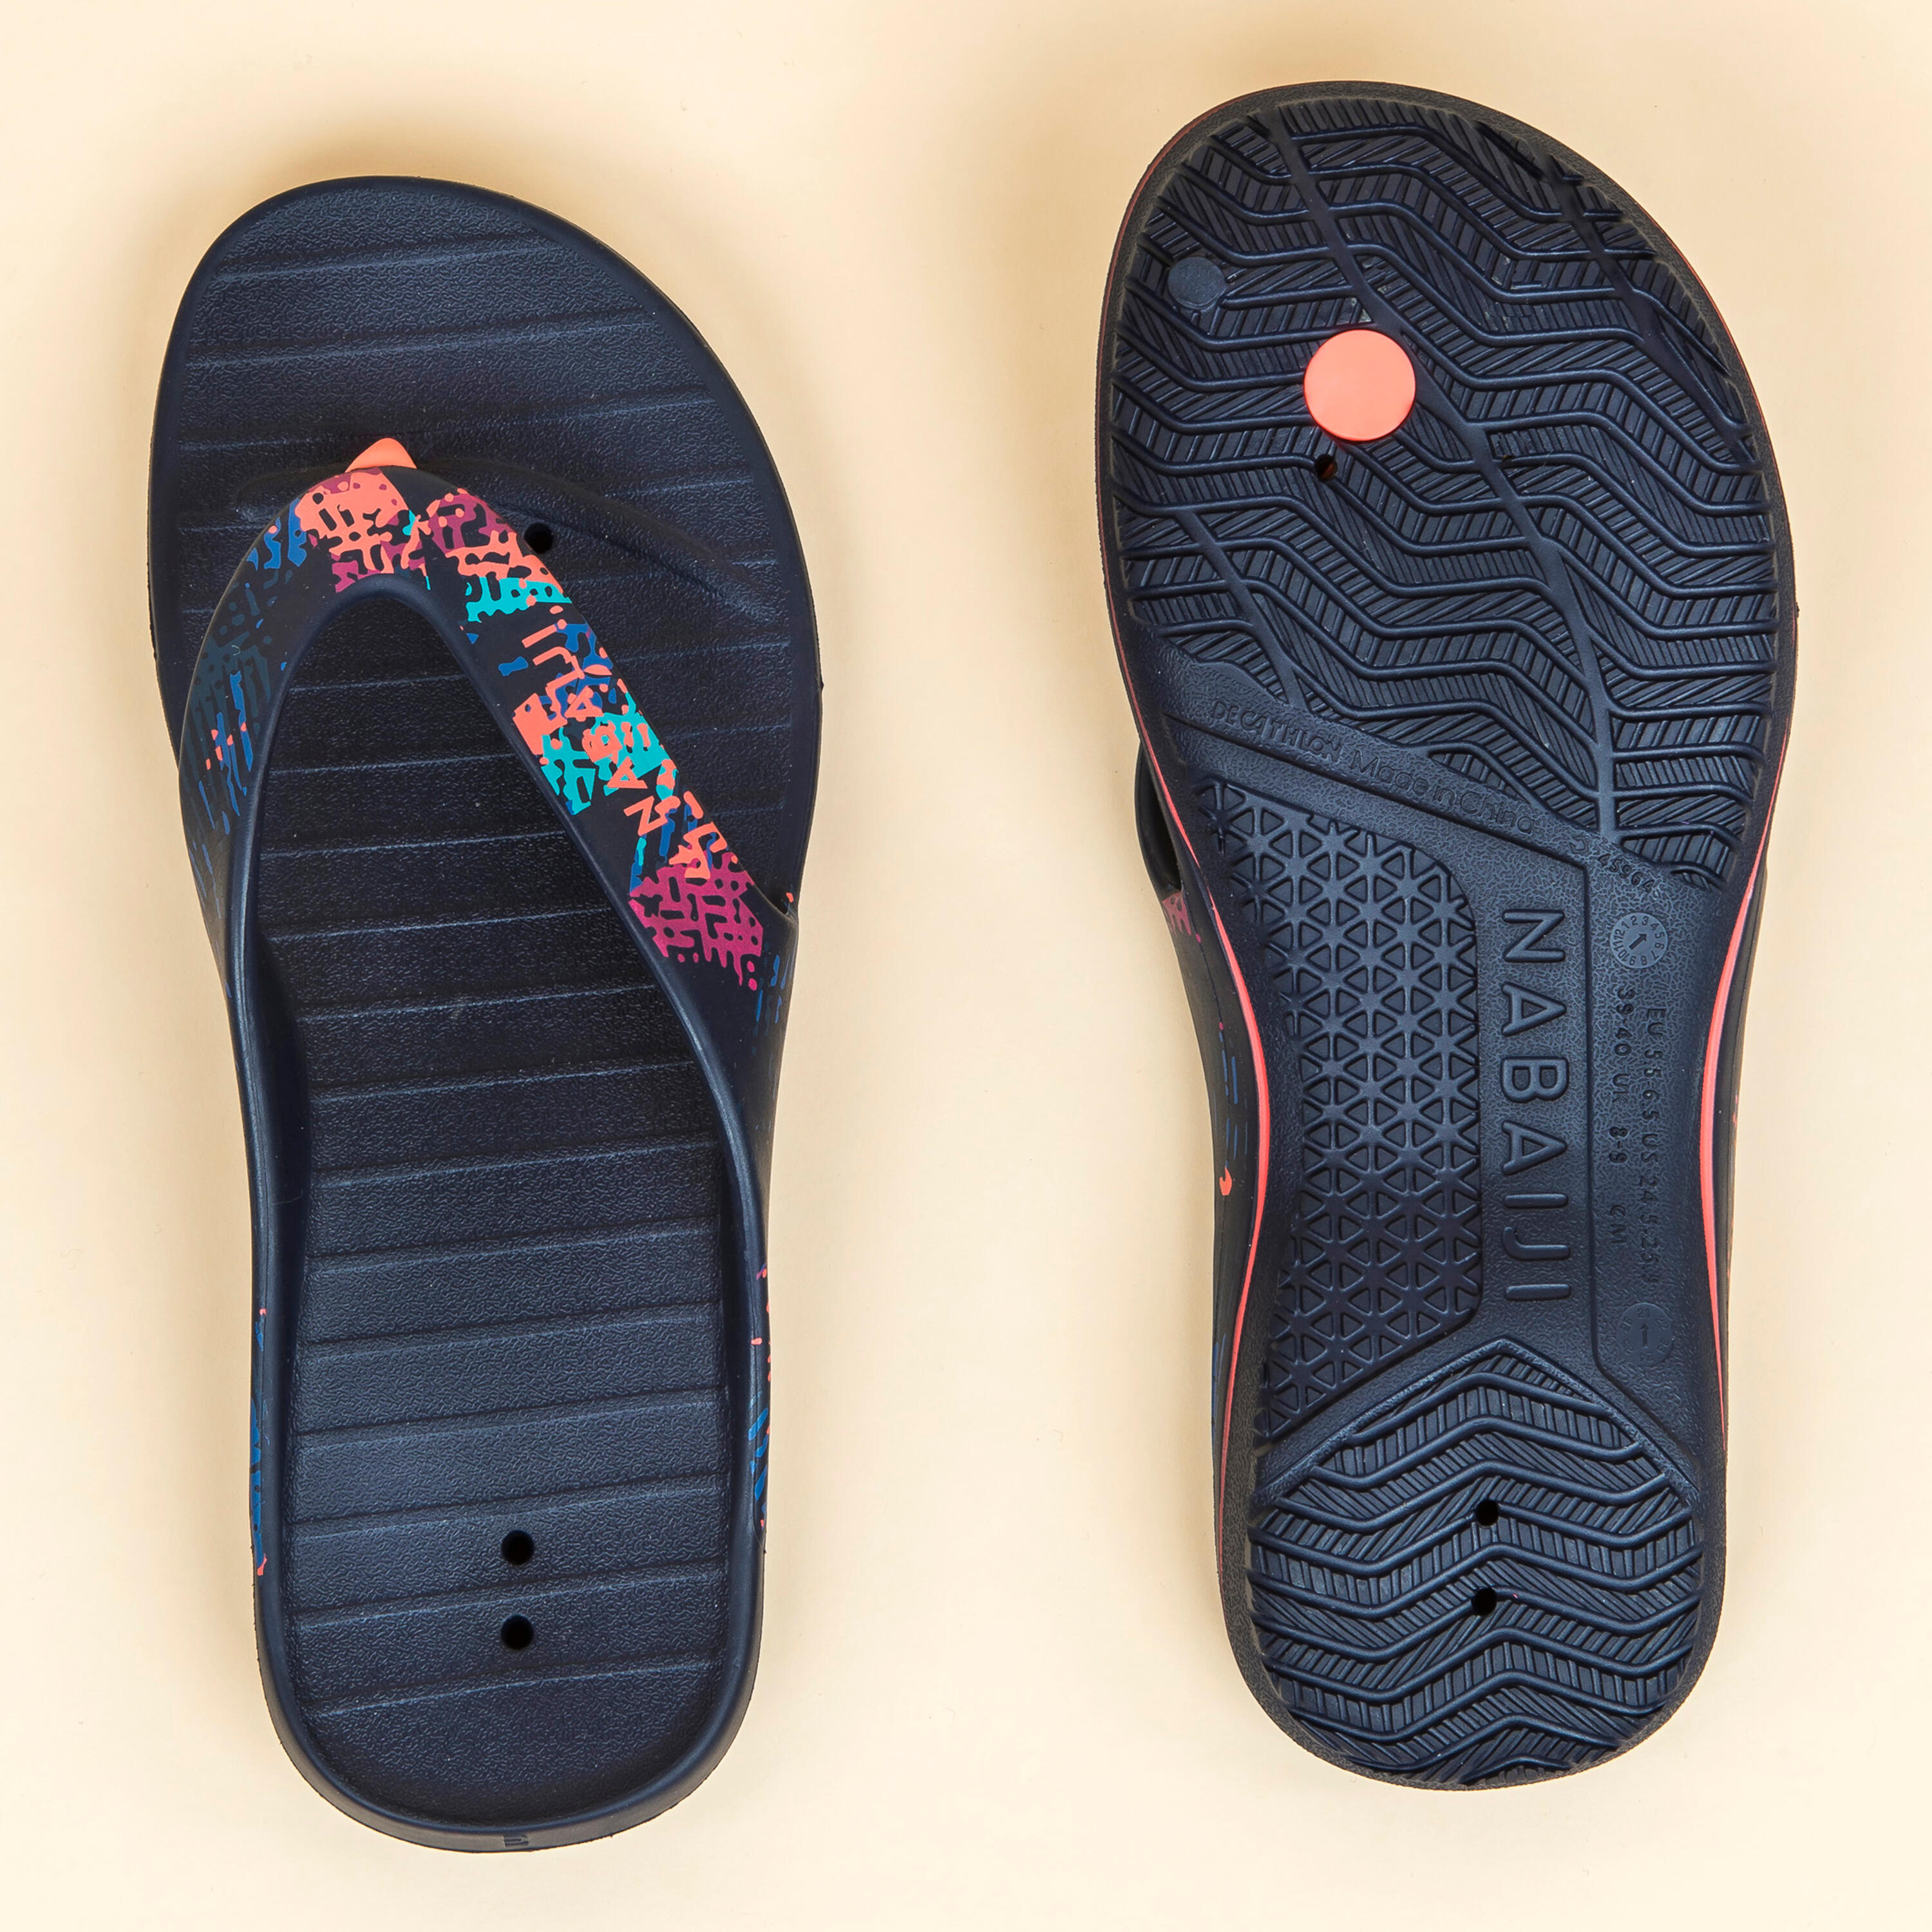 Sandales de plage femme - Tonga 500 - NABAIJI